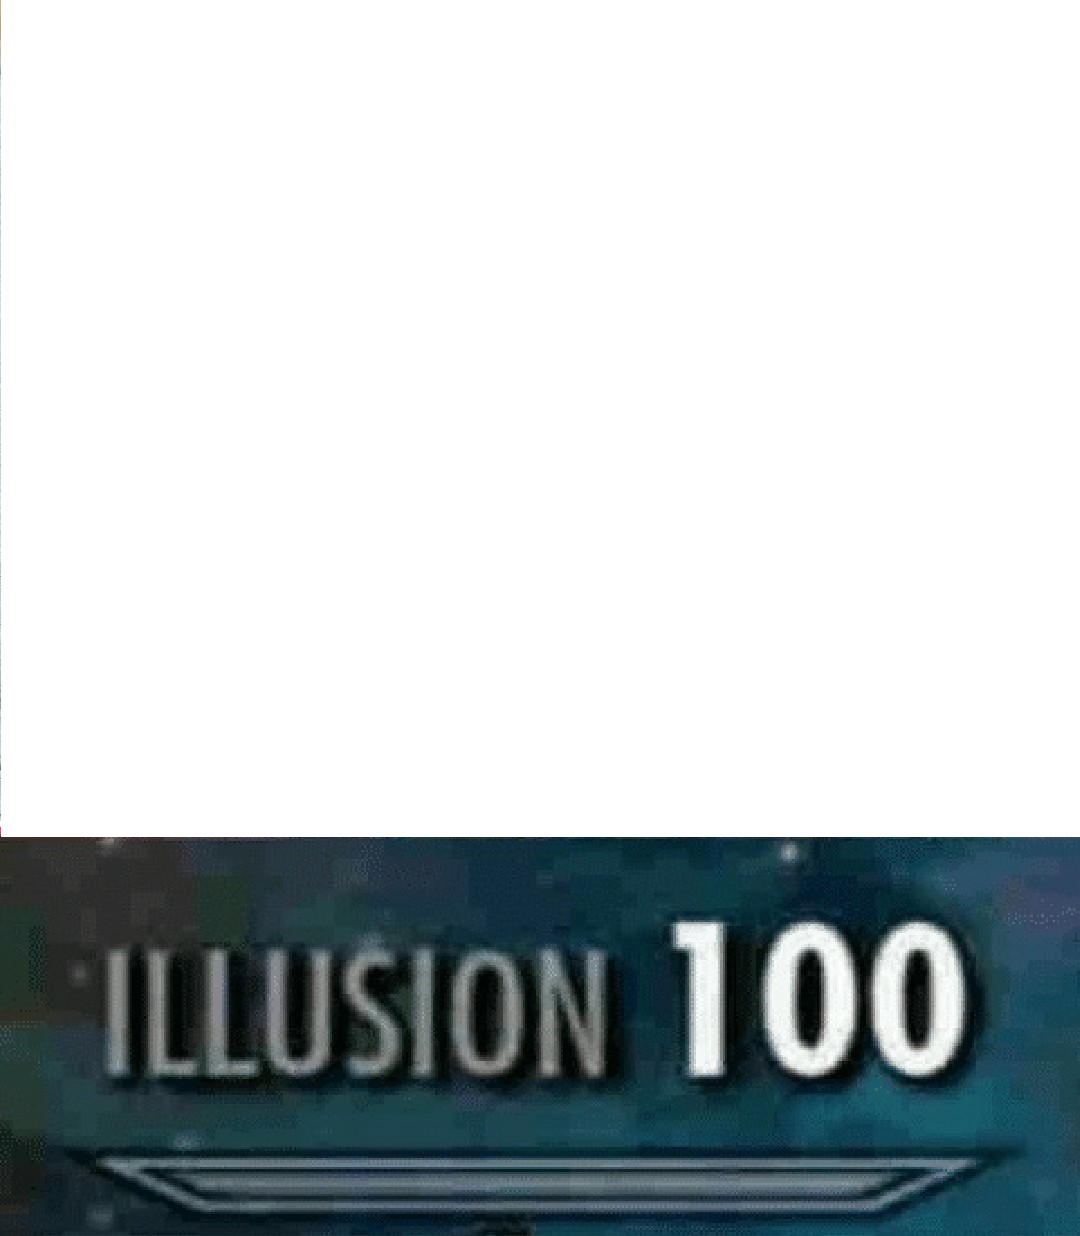 High Quality Illusion 100 Blank Meme Template